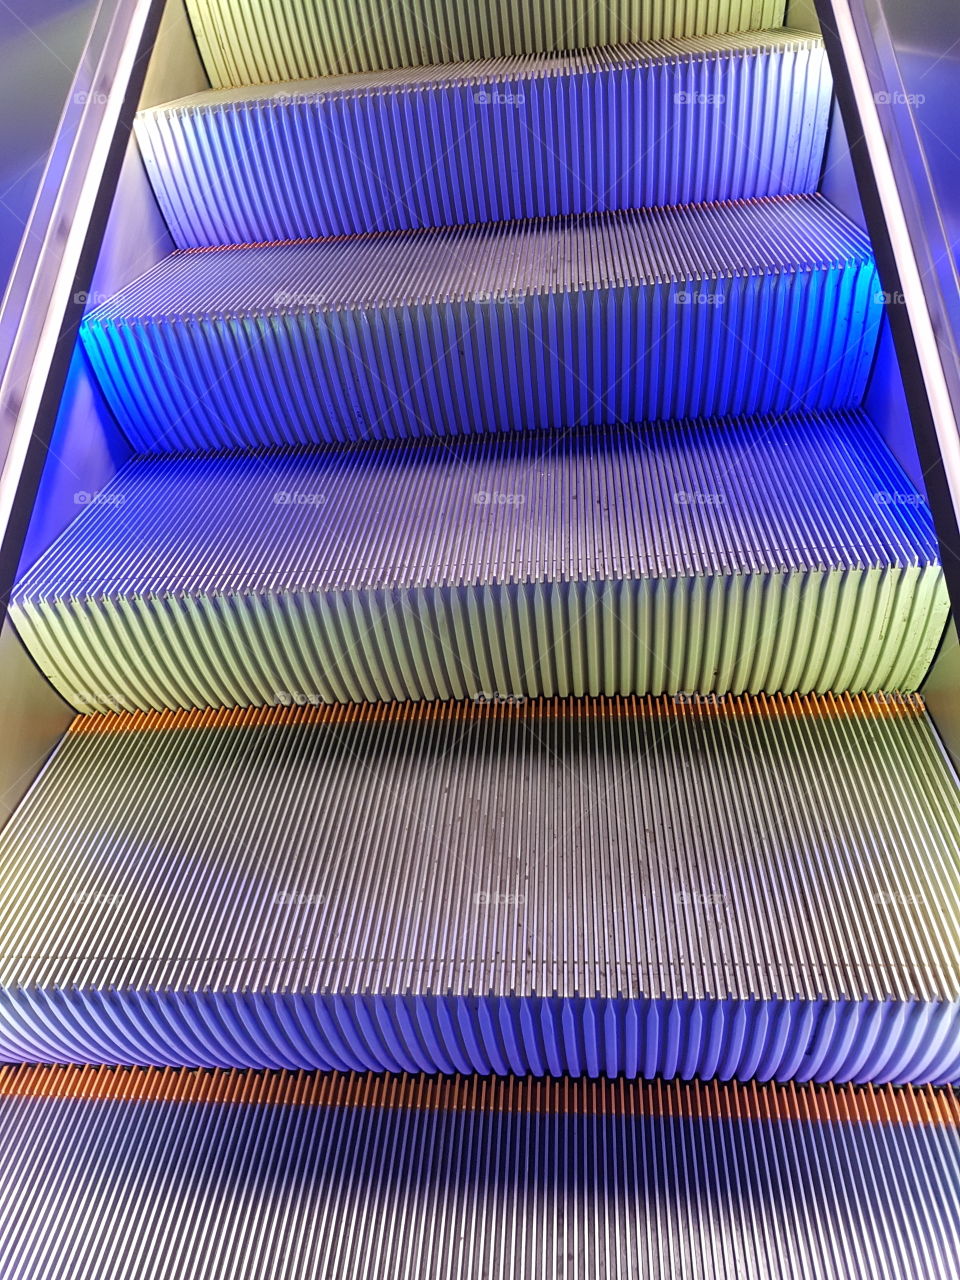 Swedish escalator